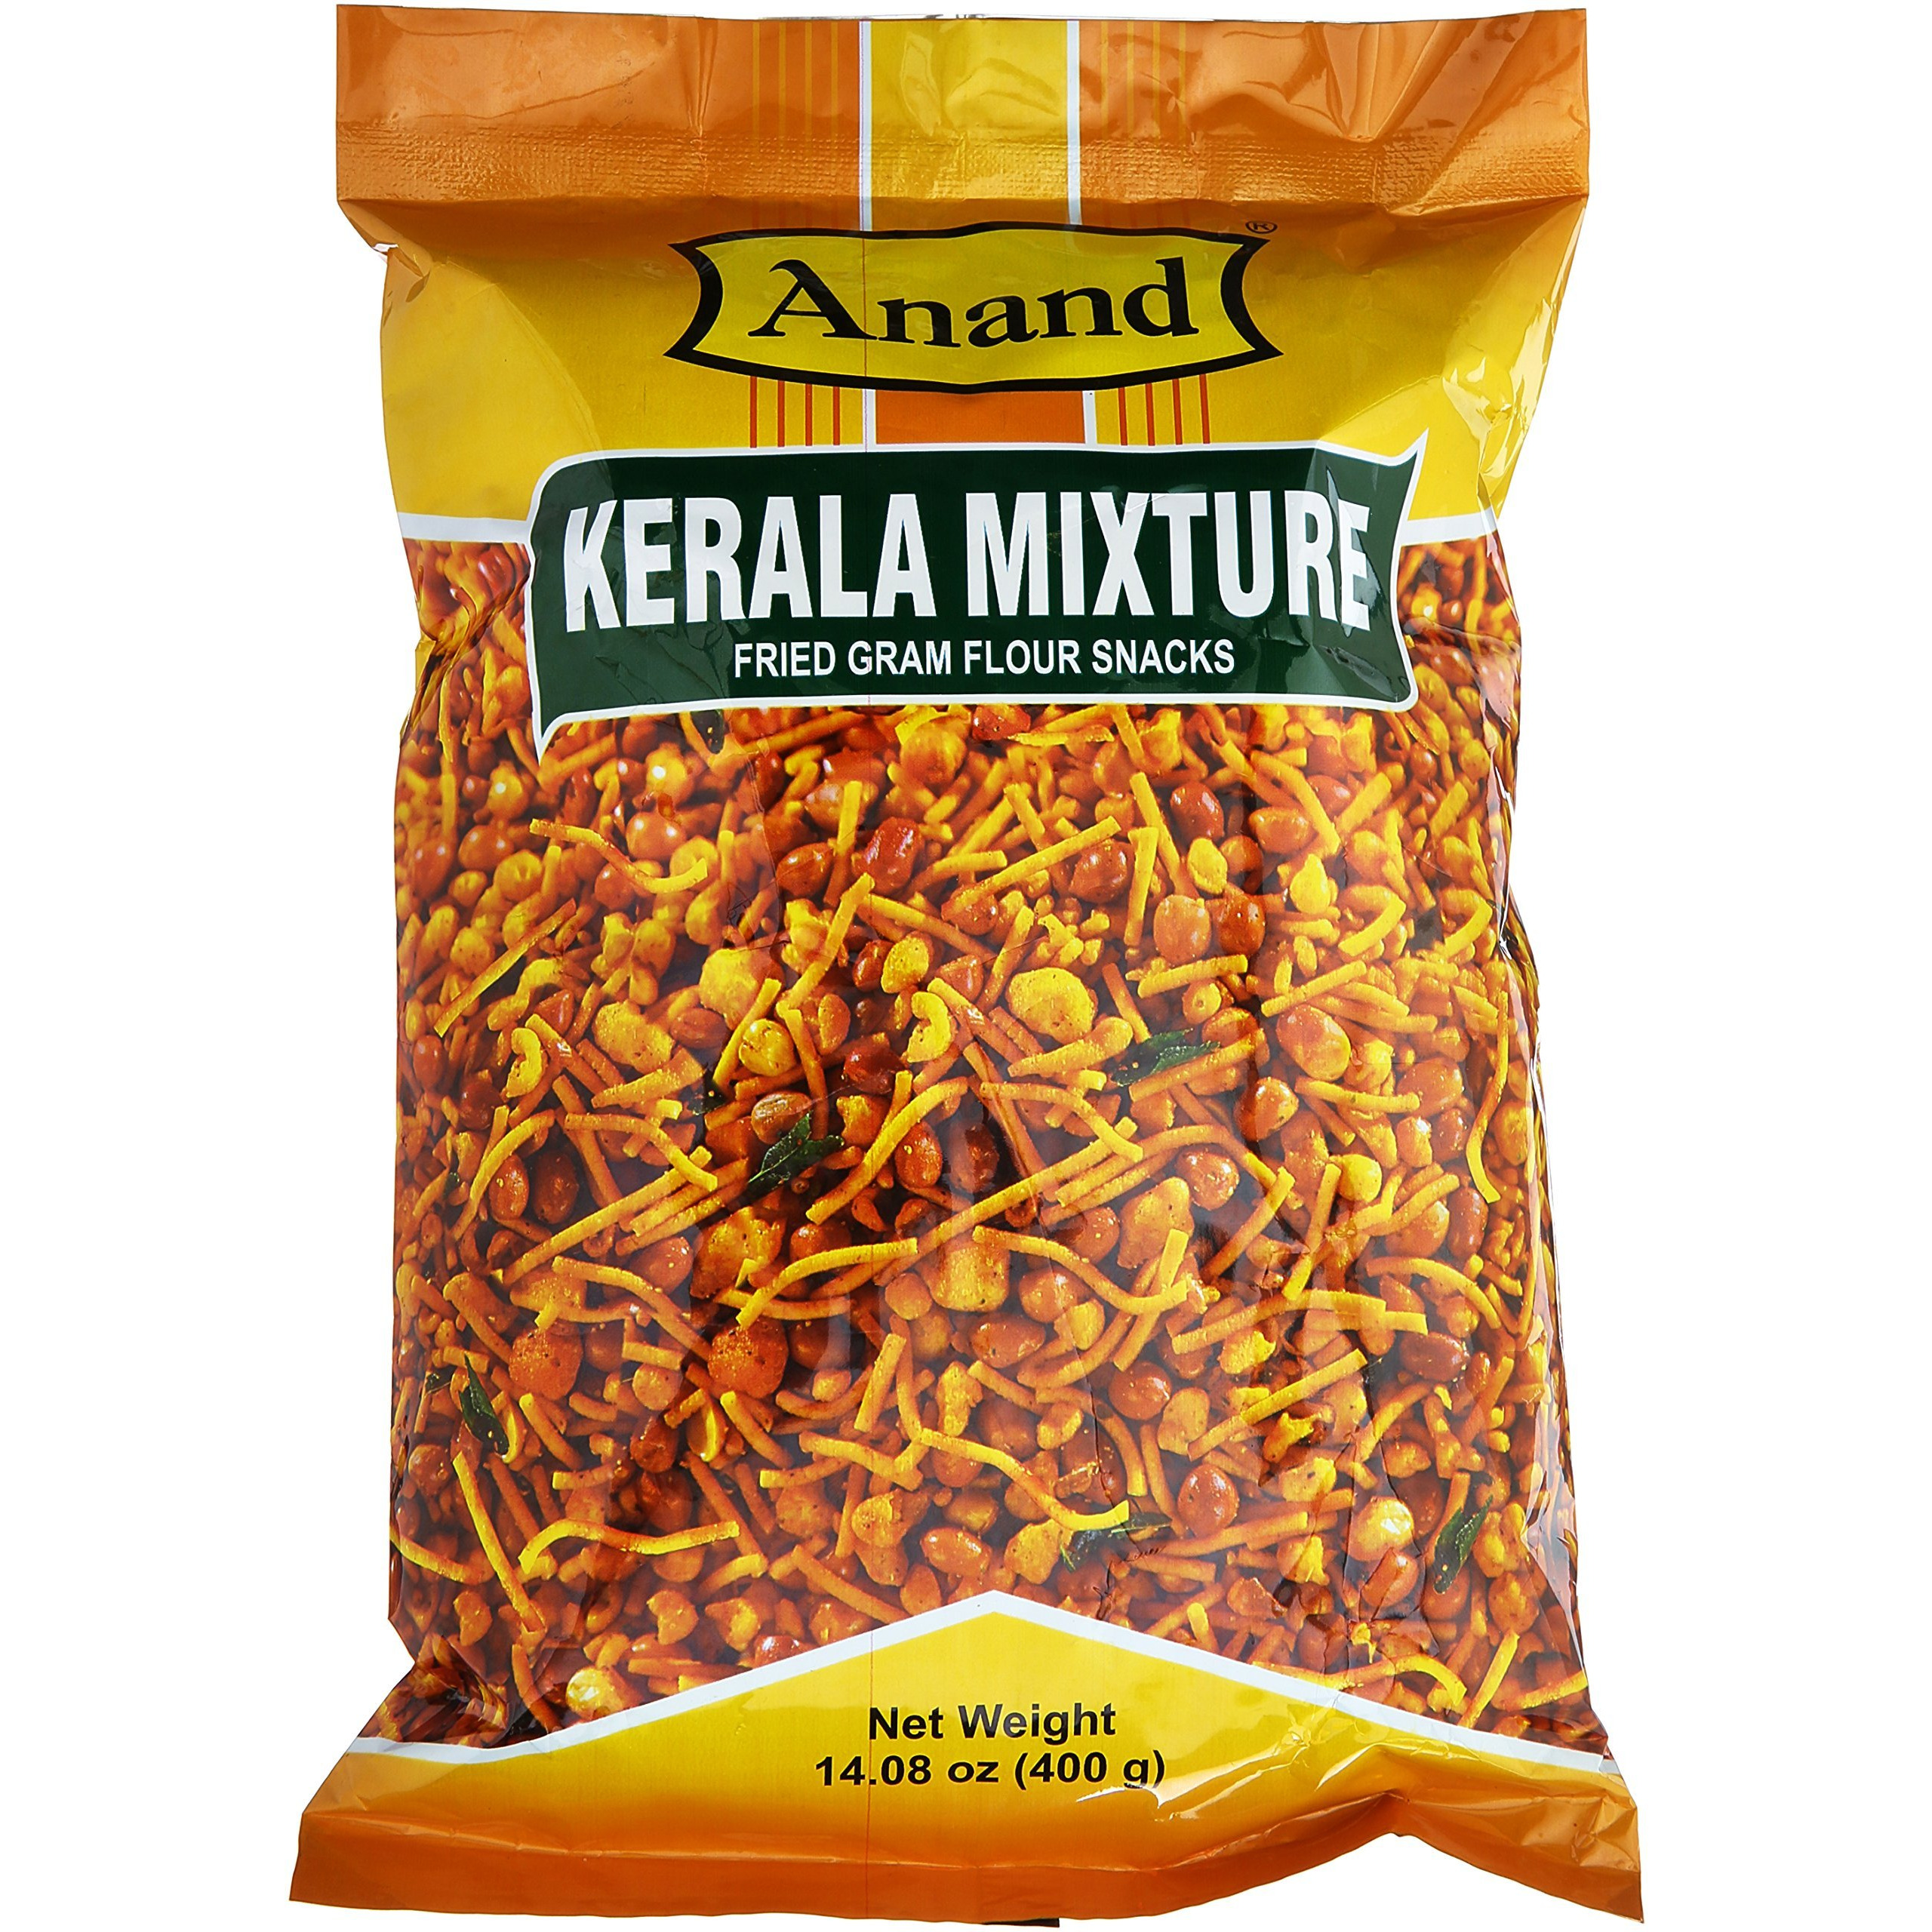 Anand Kerala Mixture 400 gm.